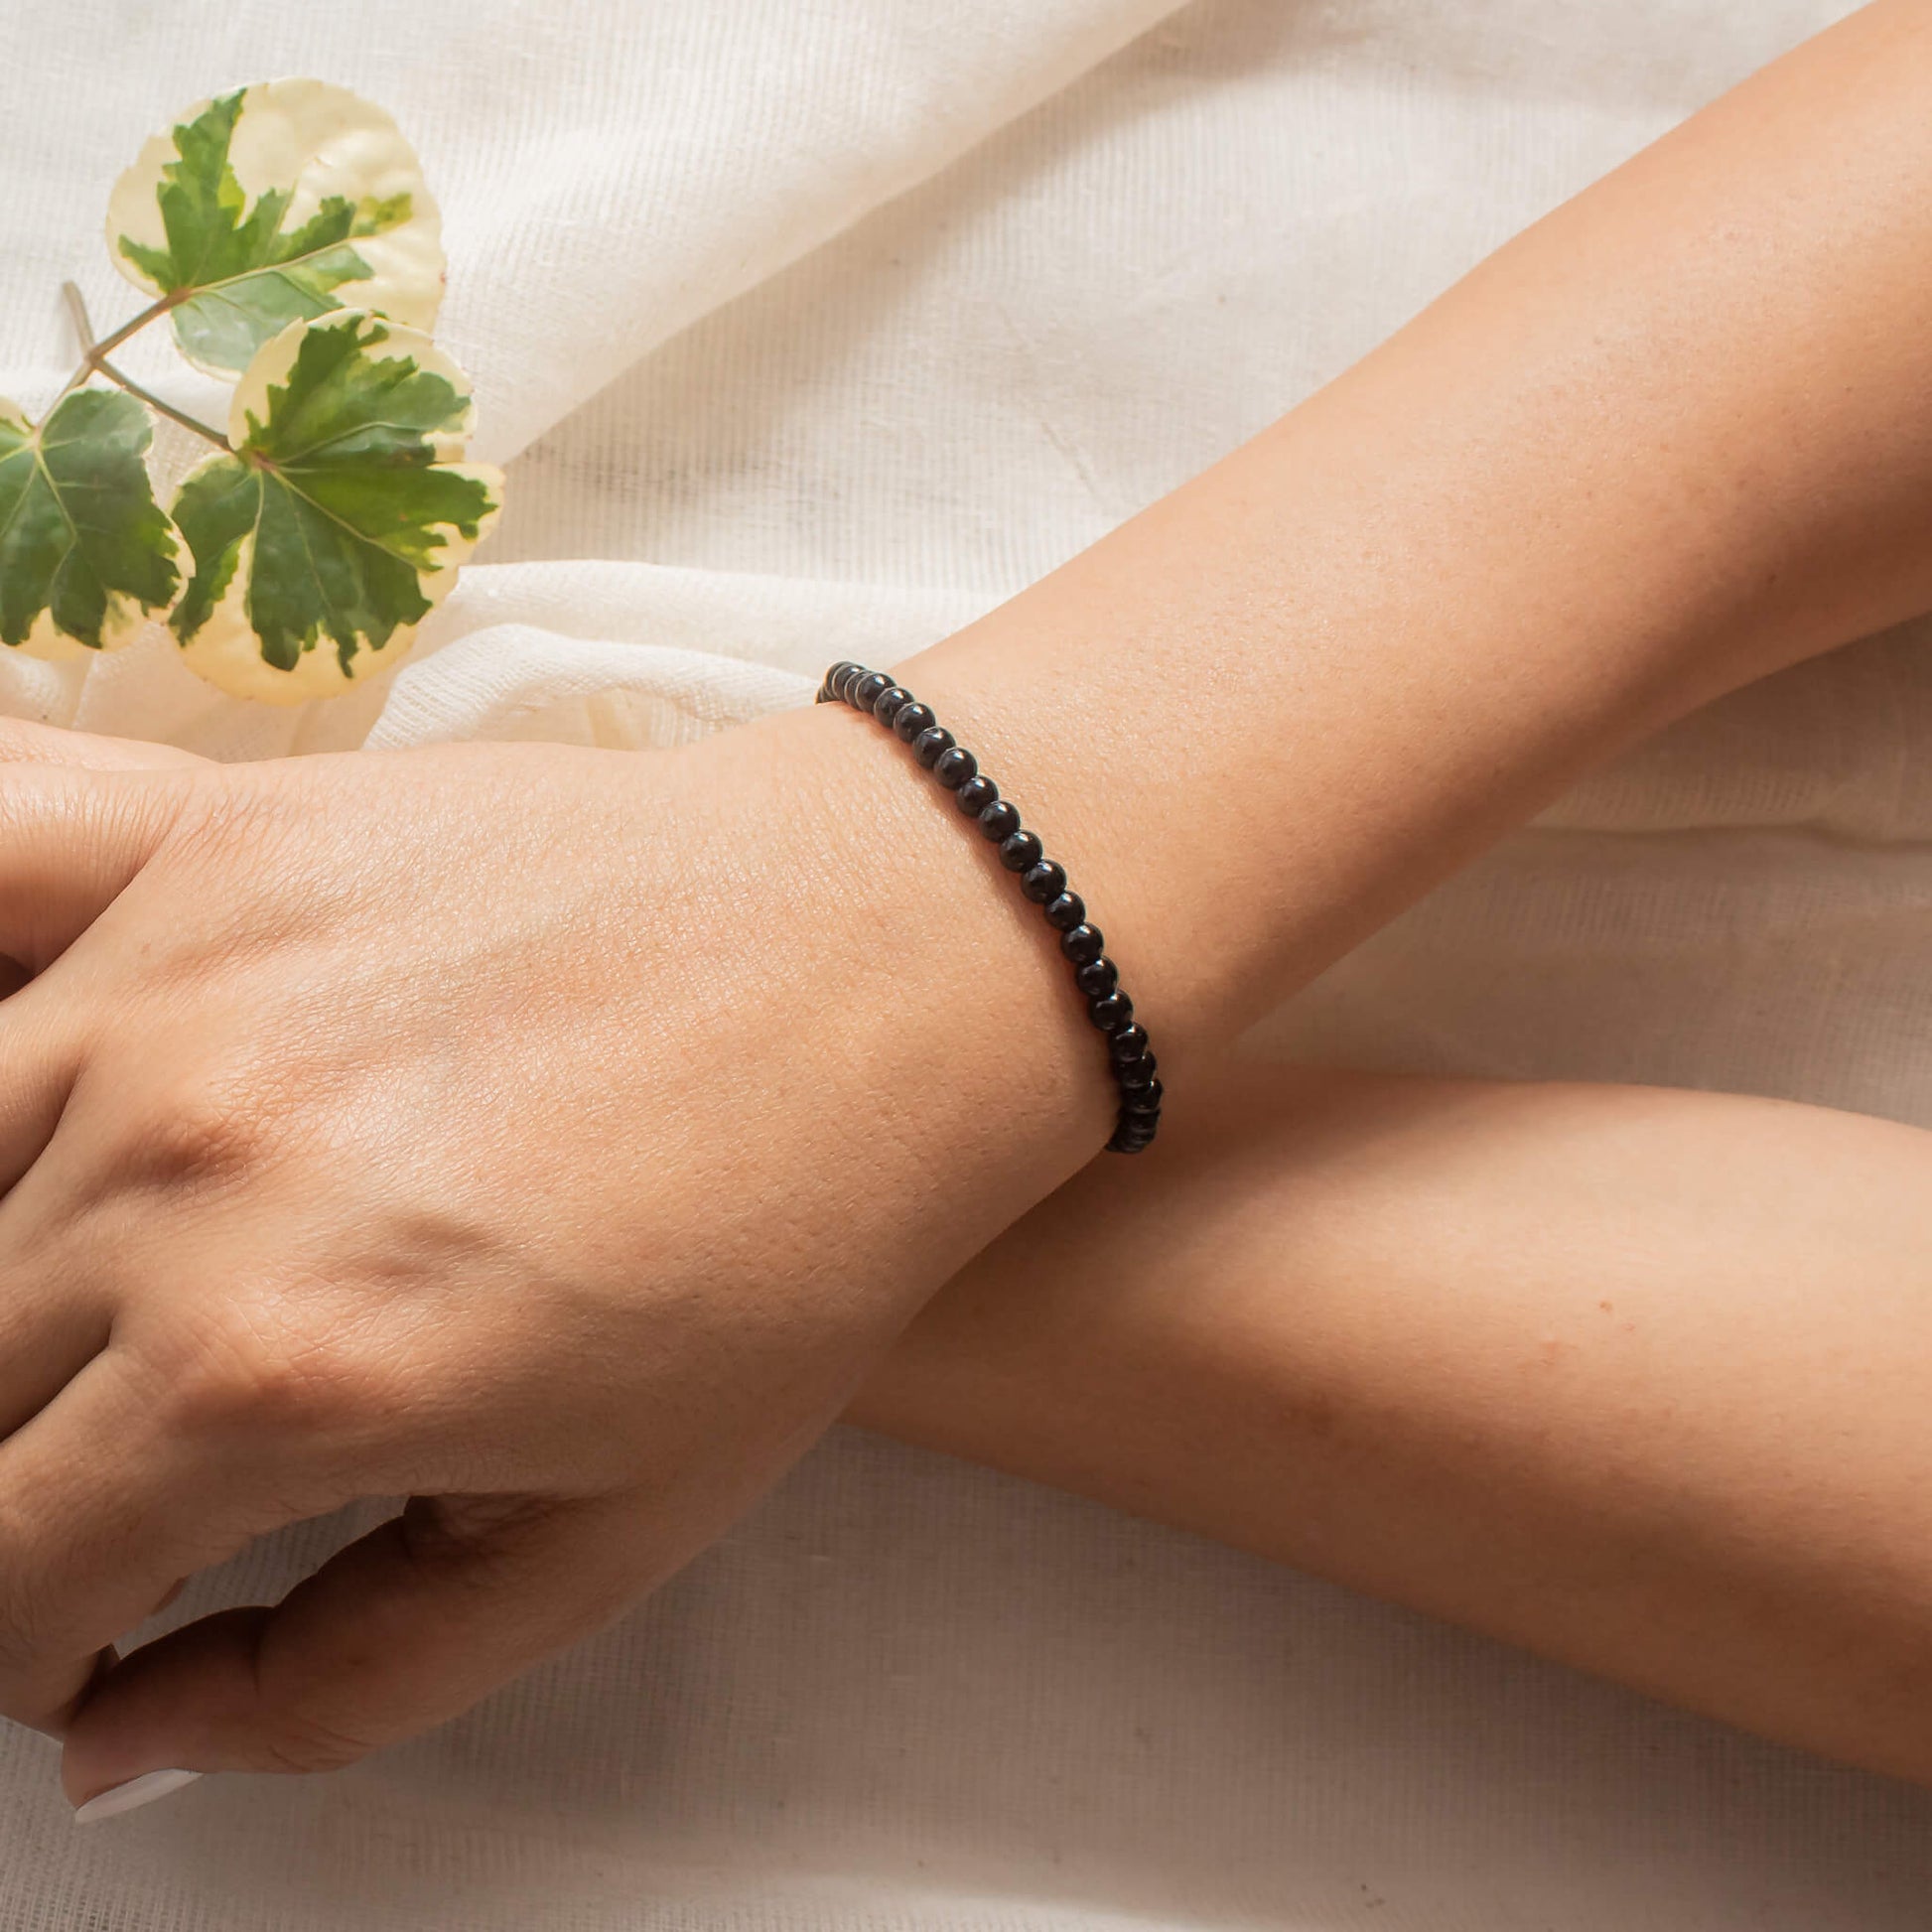 black tourmaline bracelet benefits